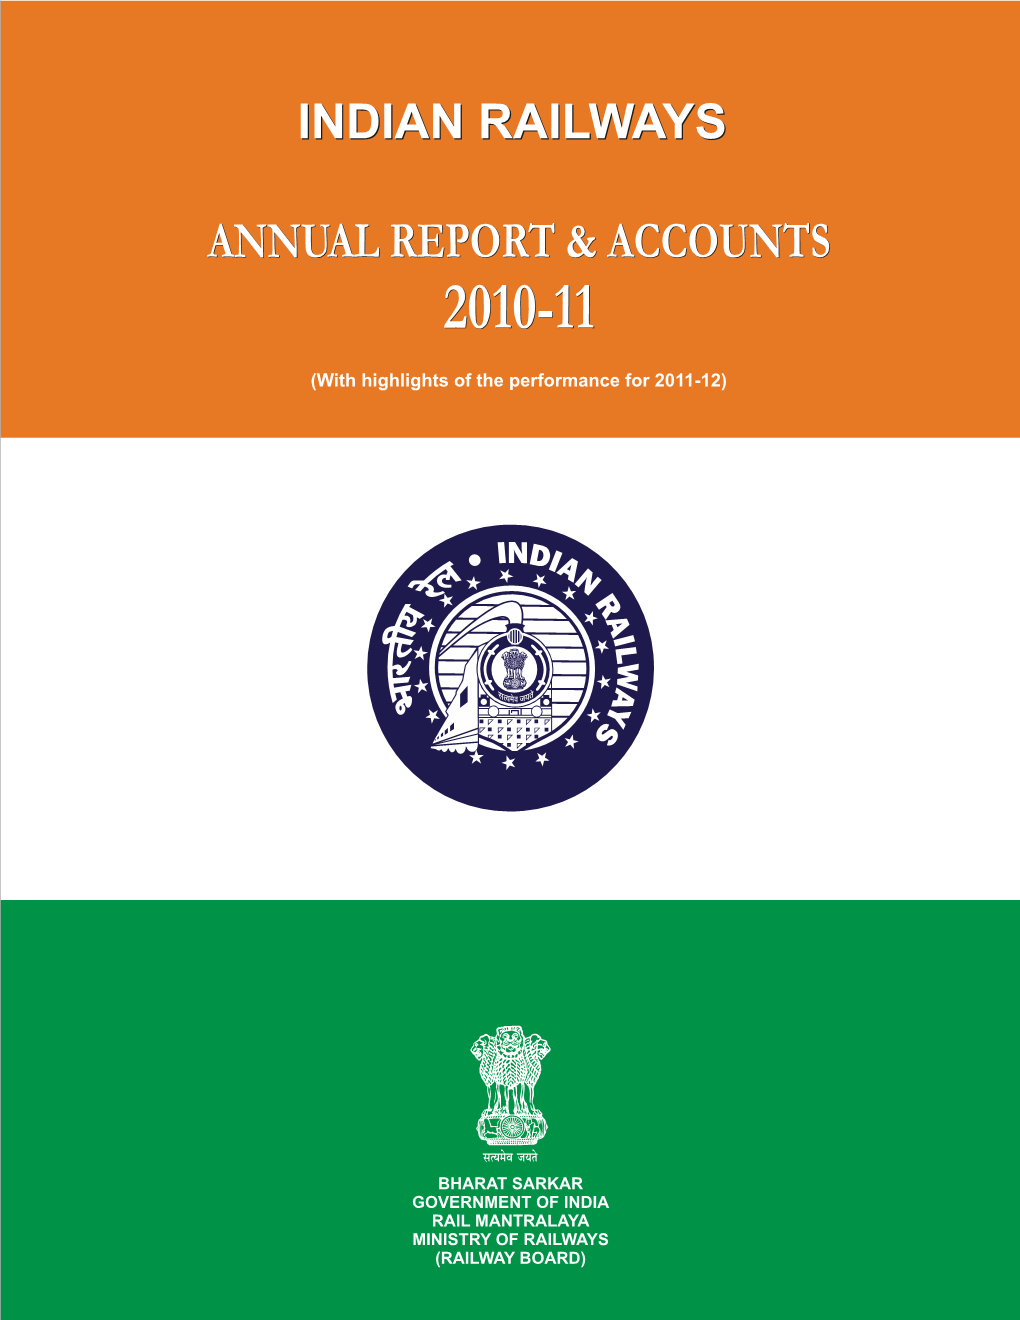 Annual Report & Accounts (2010-11)